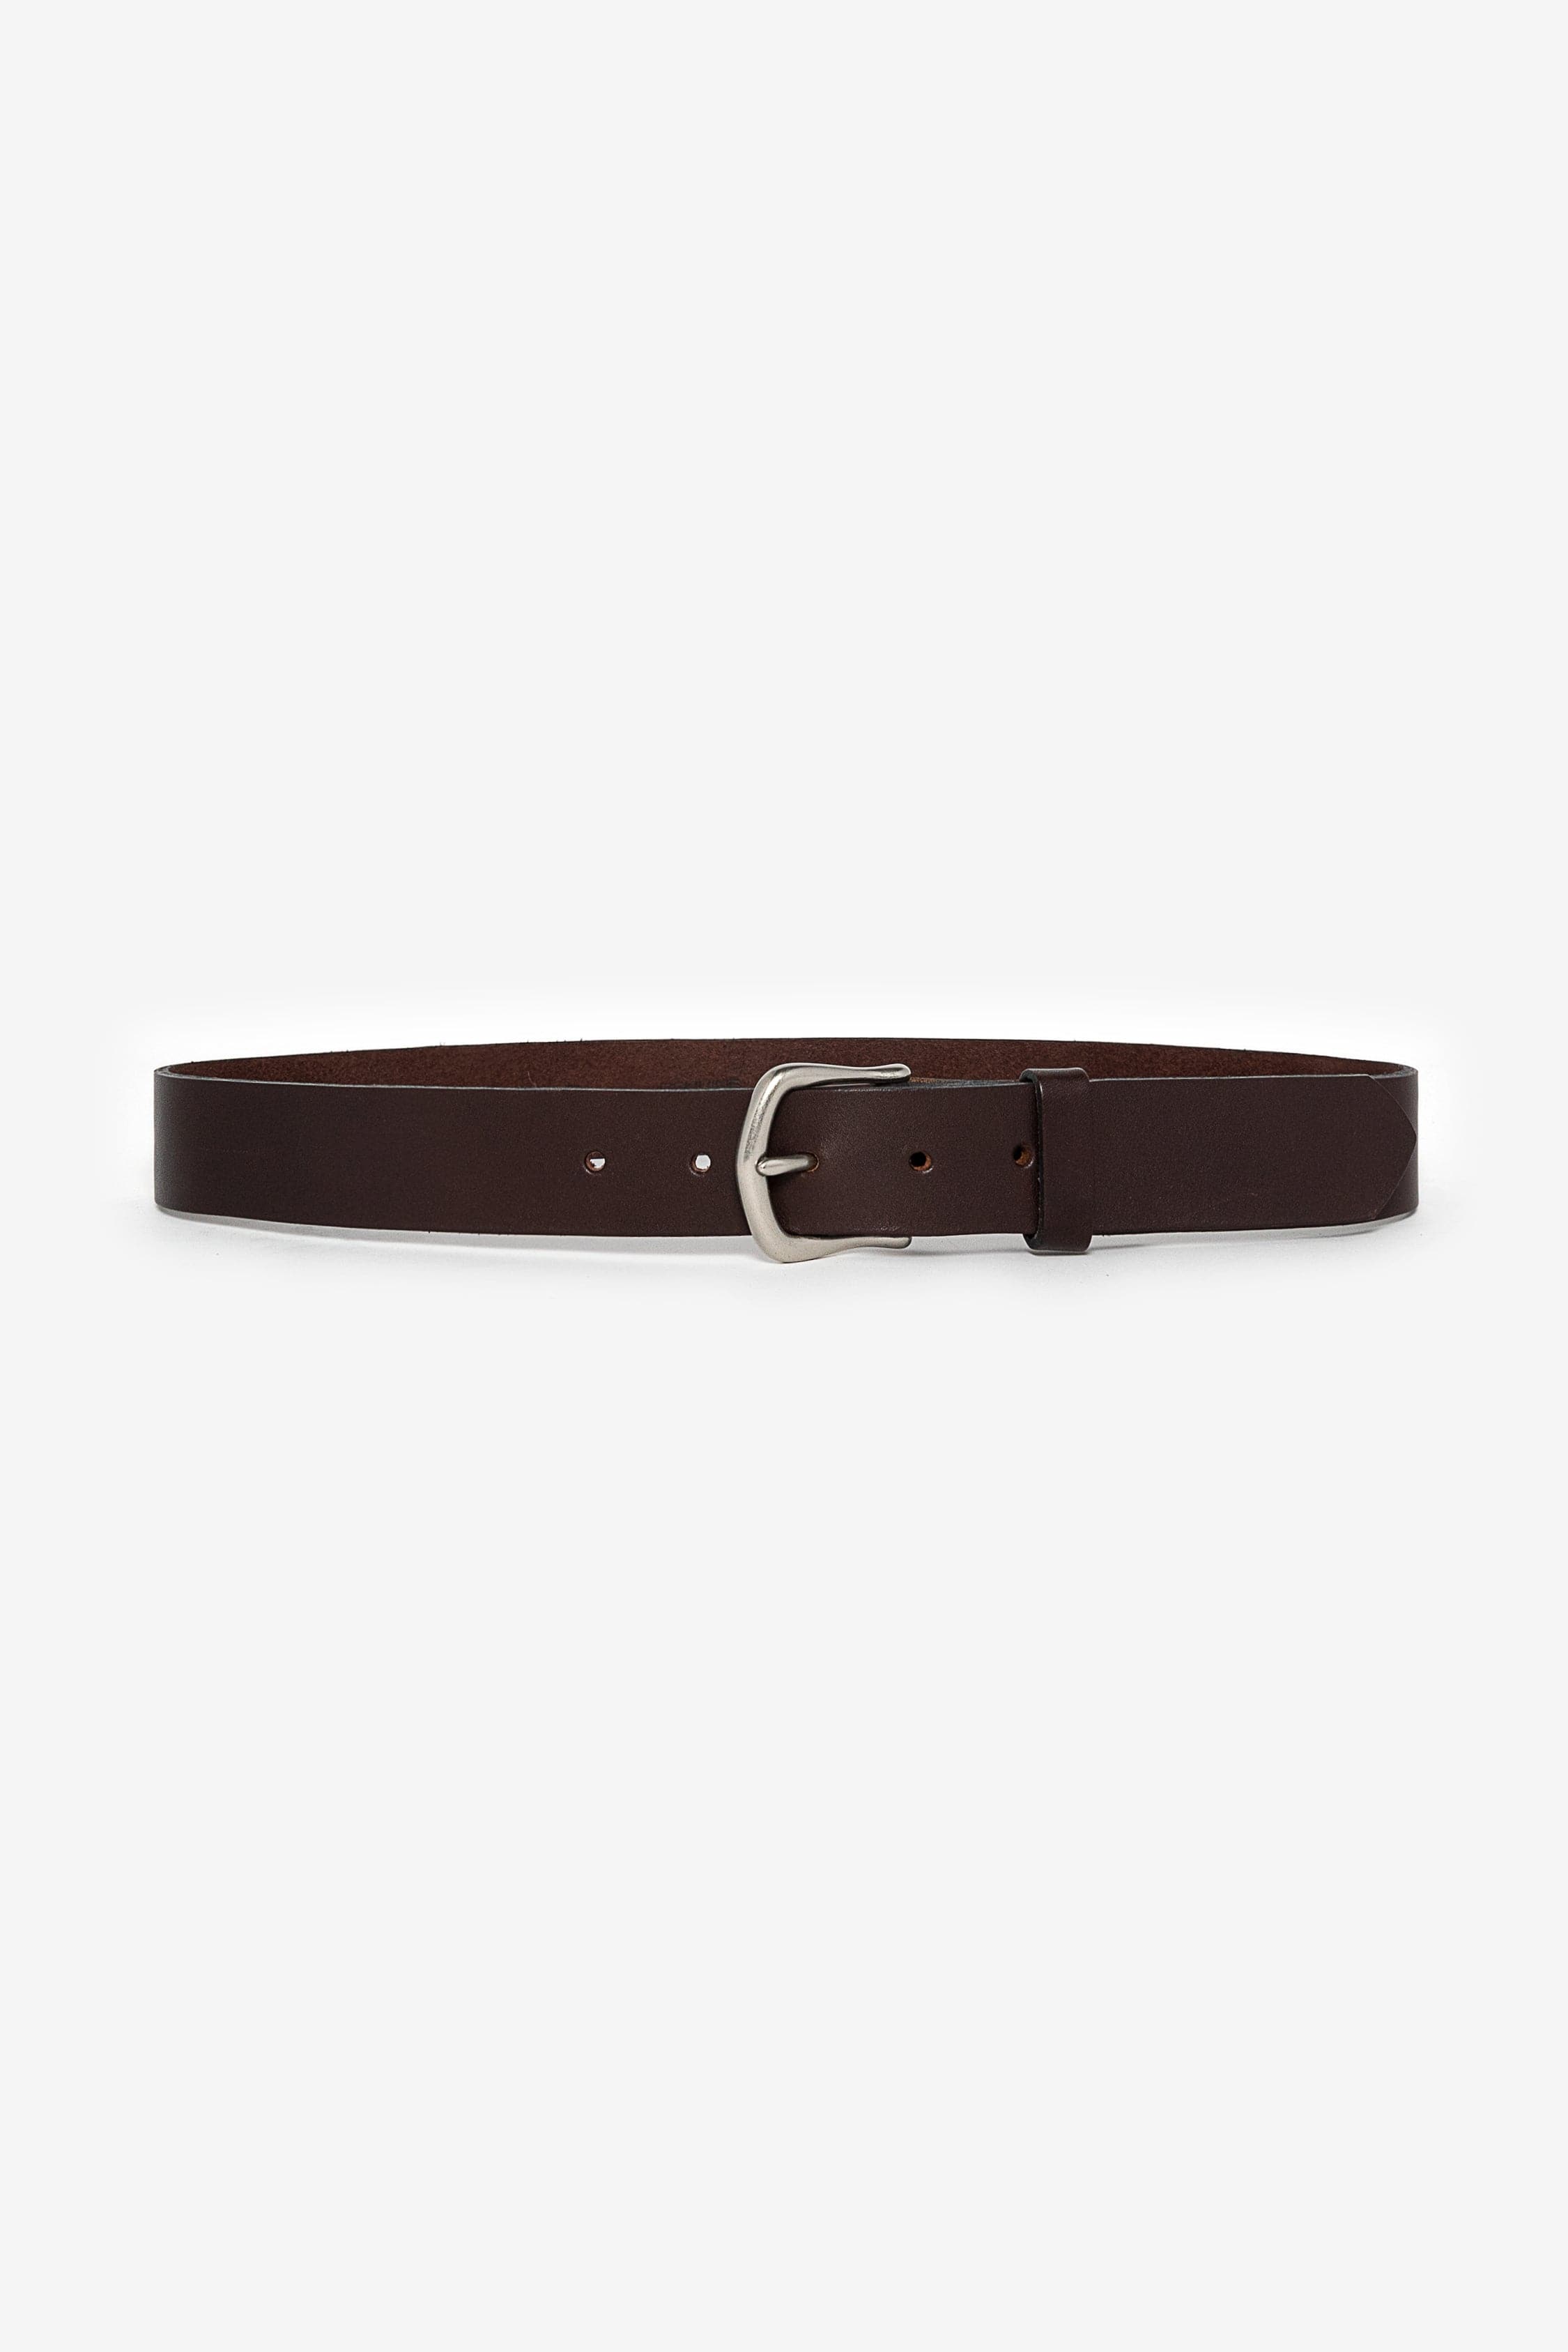 RSALBT02 - Unisex Arrow Buckle Leather Belt – Los Angeles Apparel